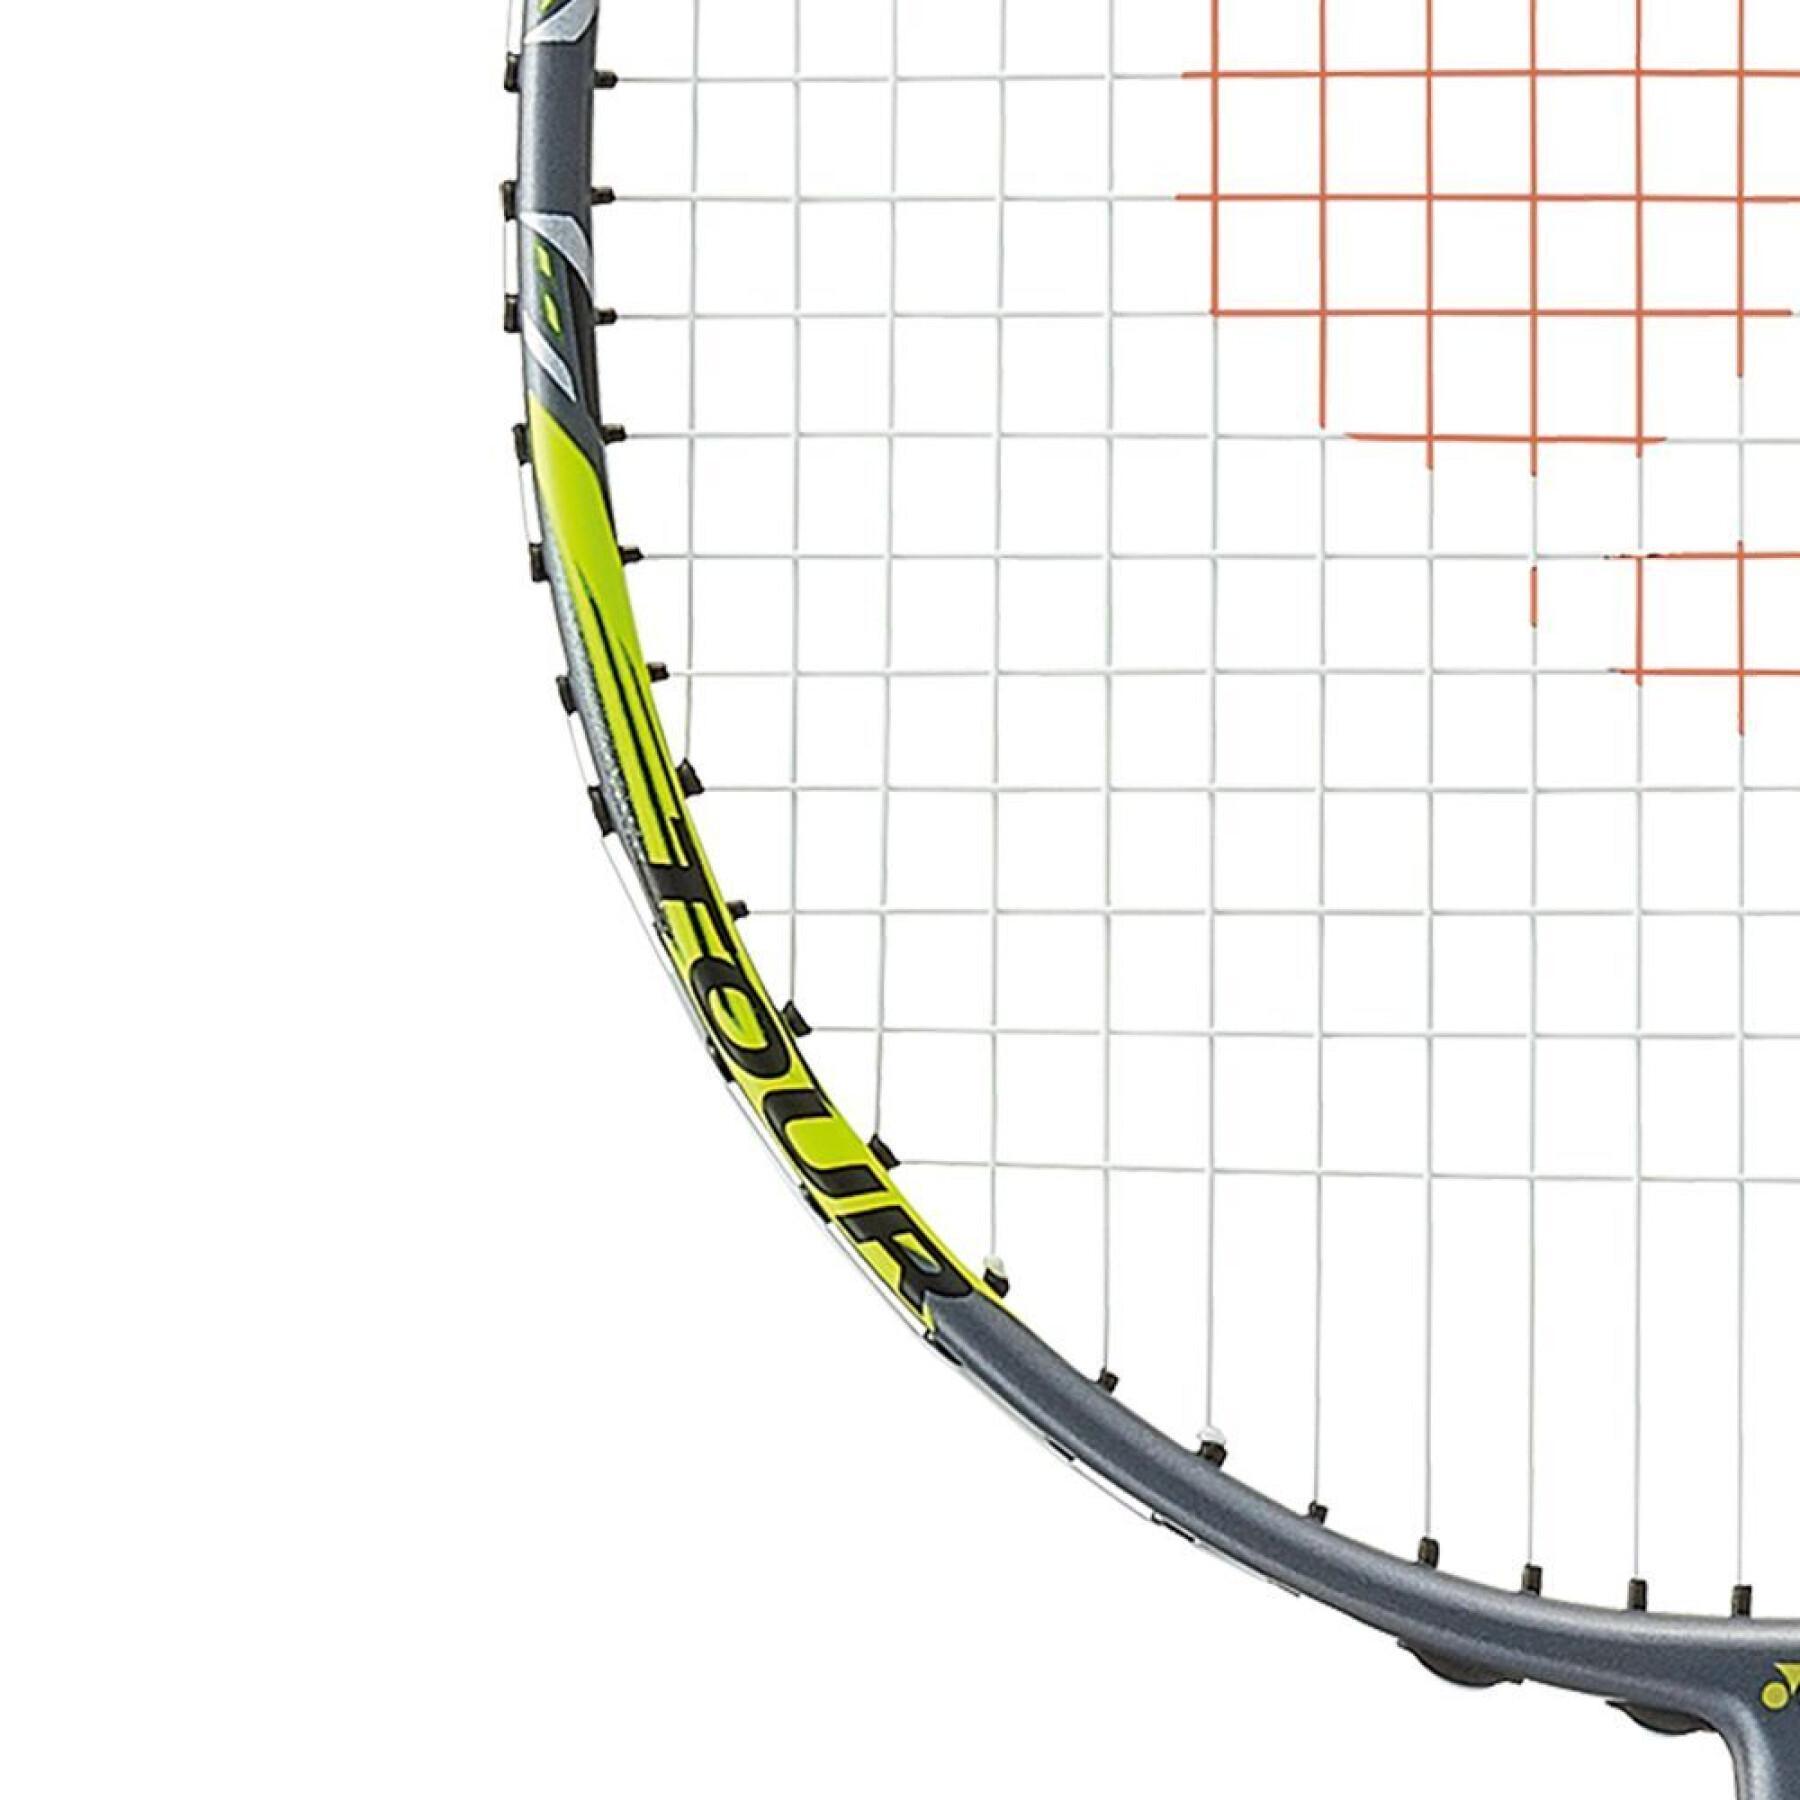 Badminton racket Yonex Arcsaber 7 tour 4U5